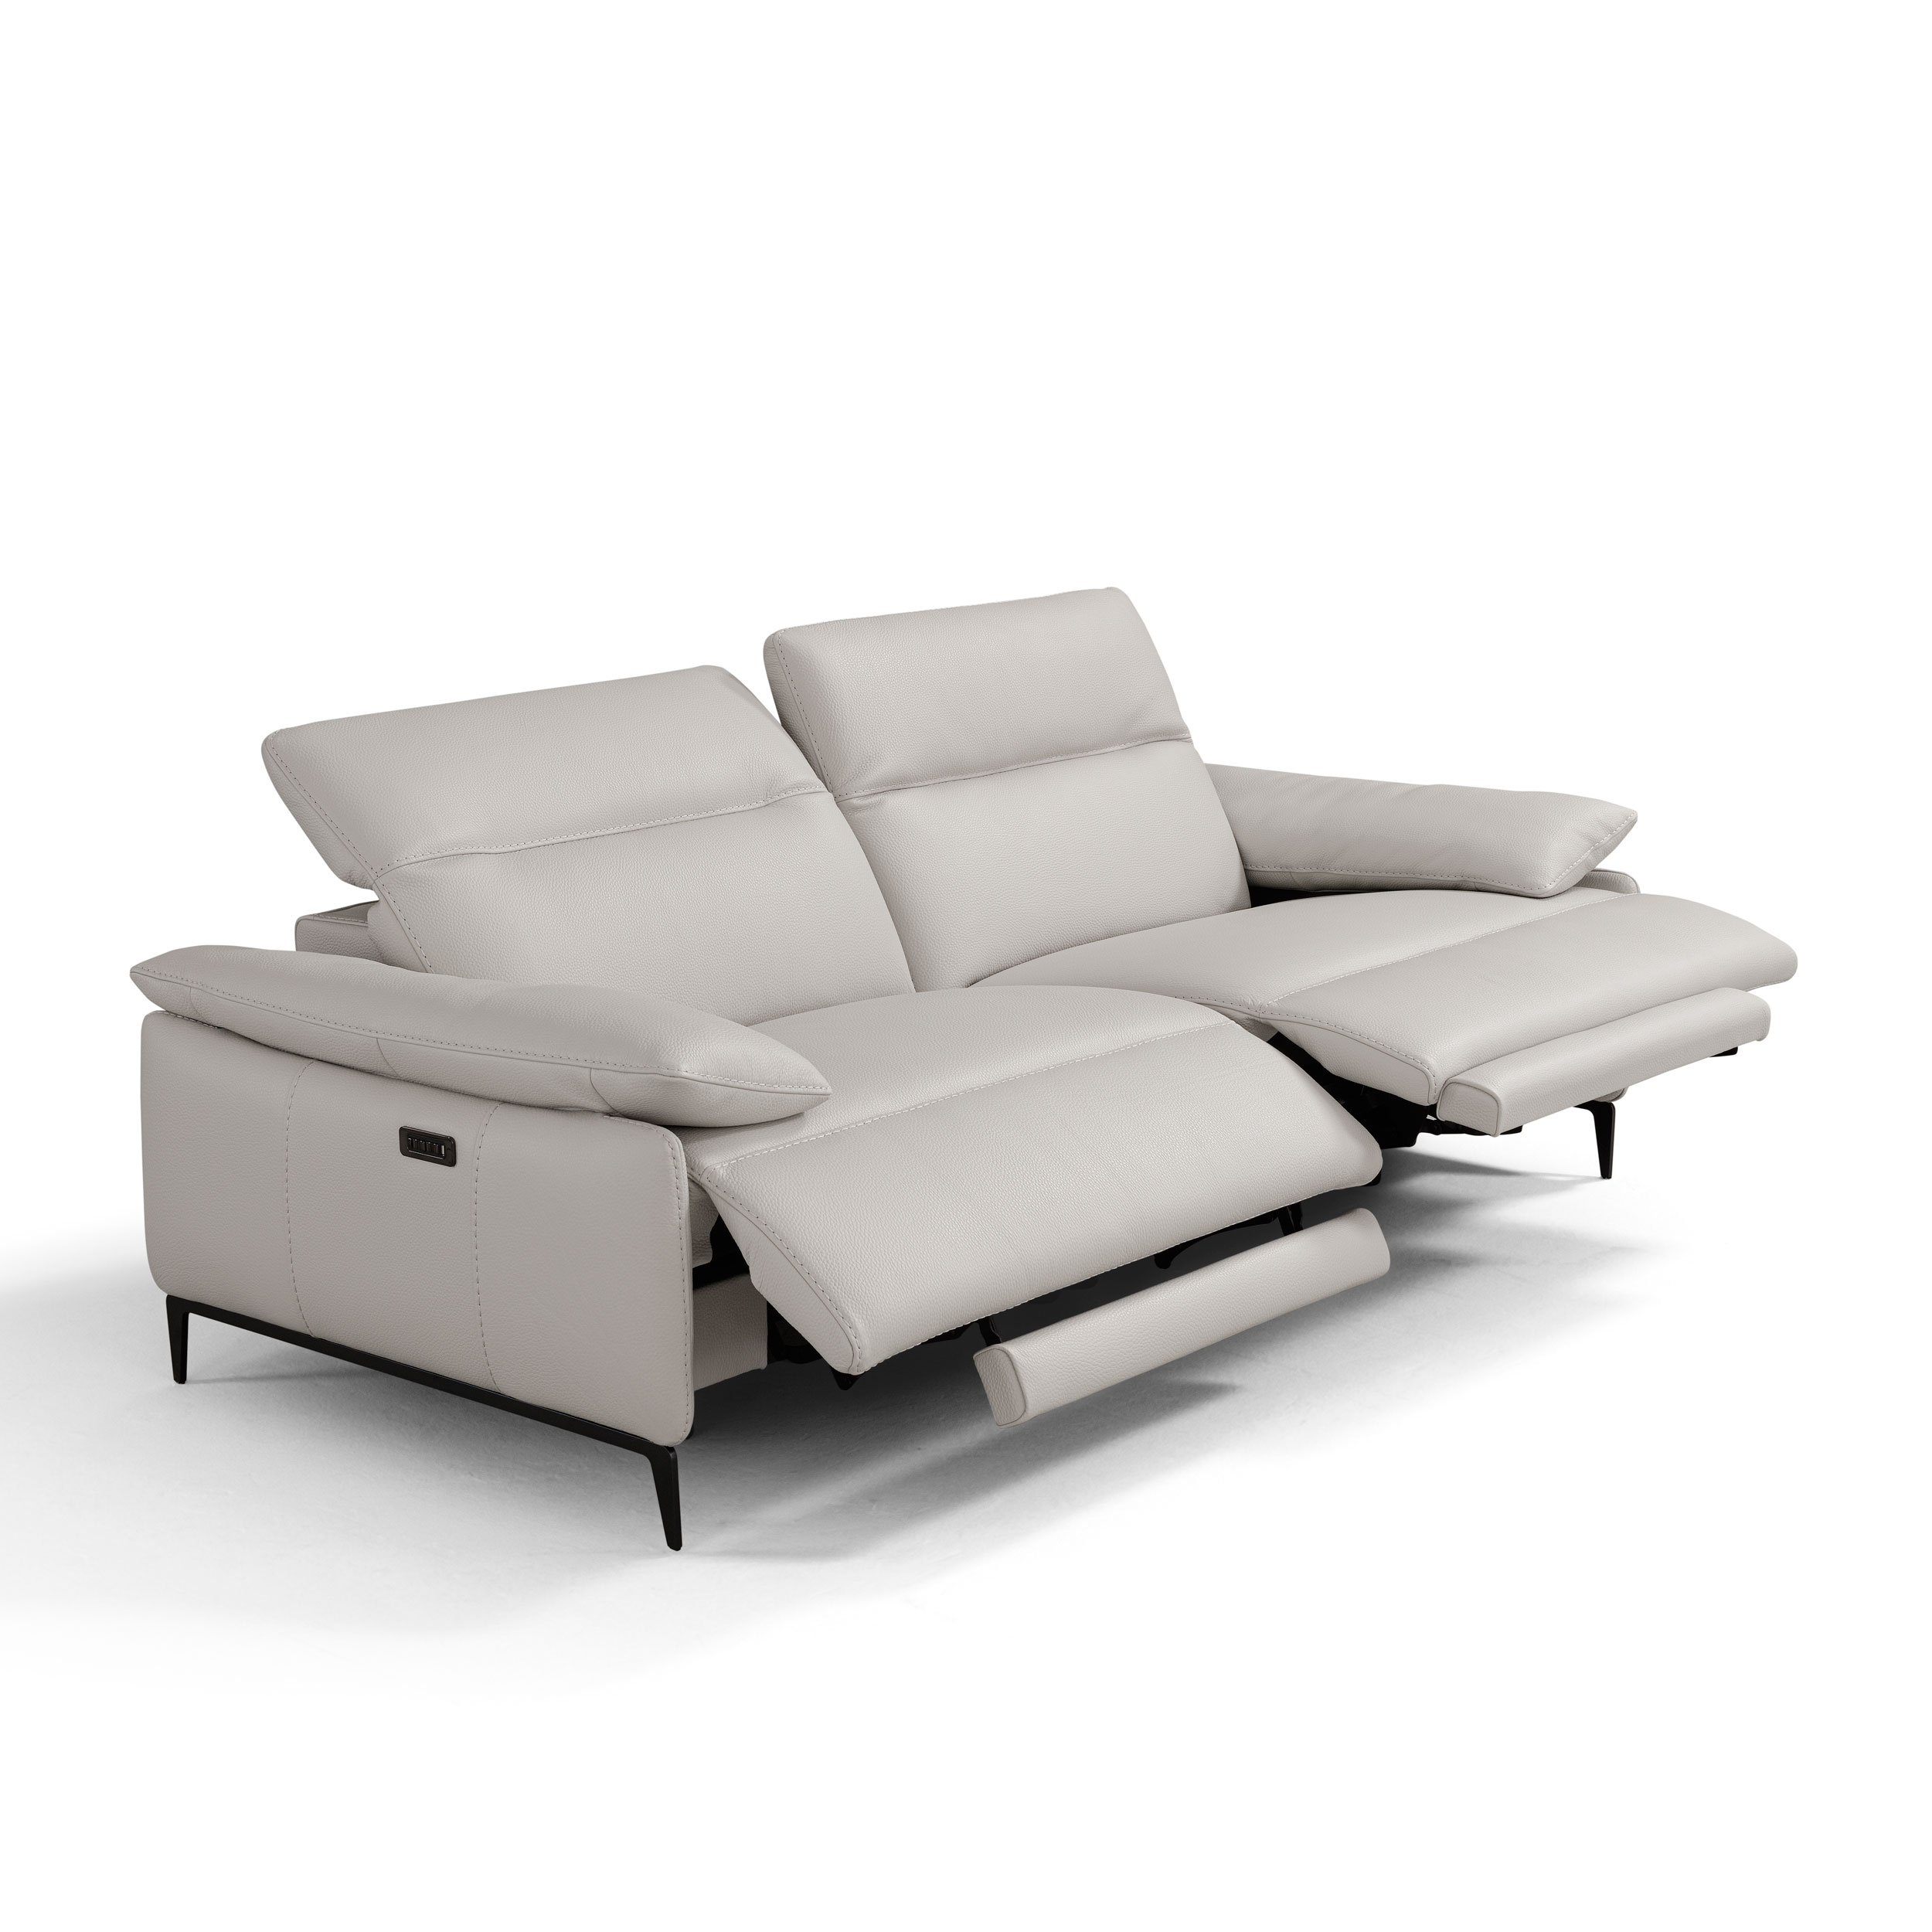 I845 Dual Power Recliner Italian Leather Sofa